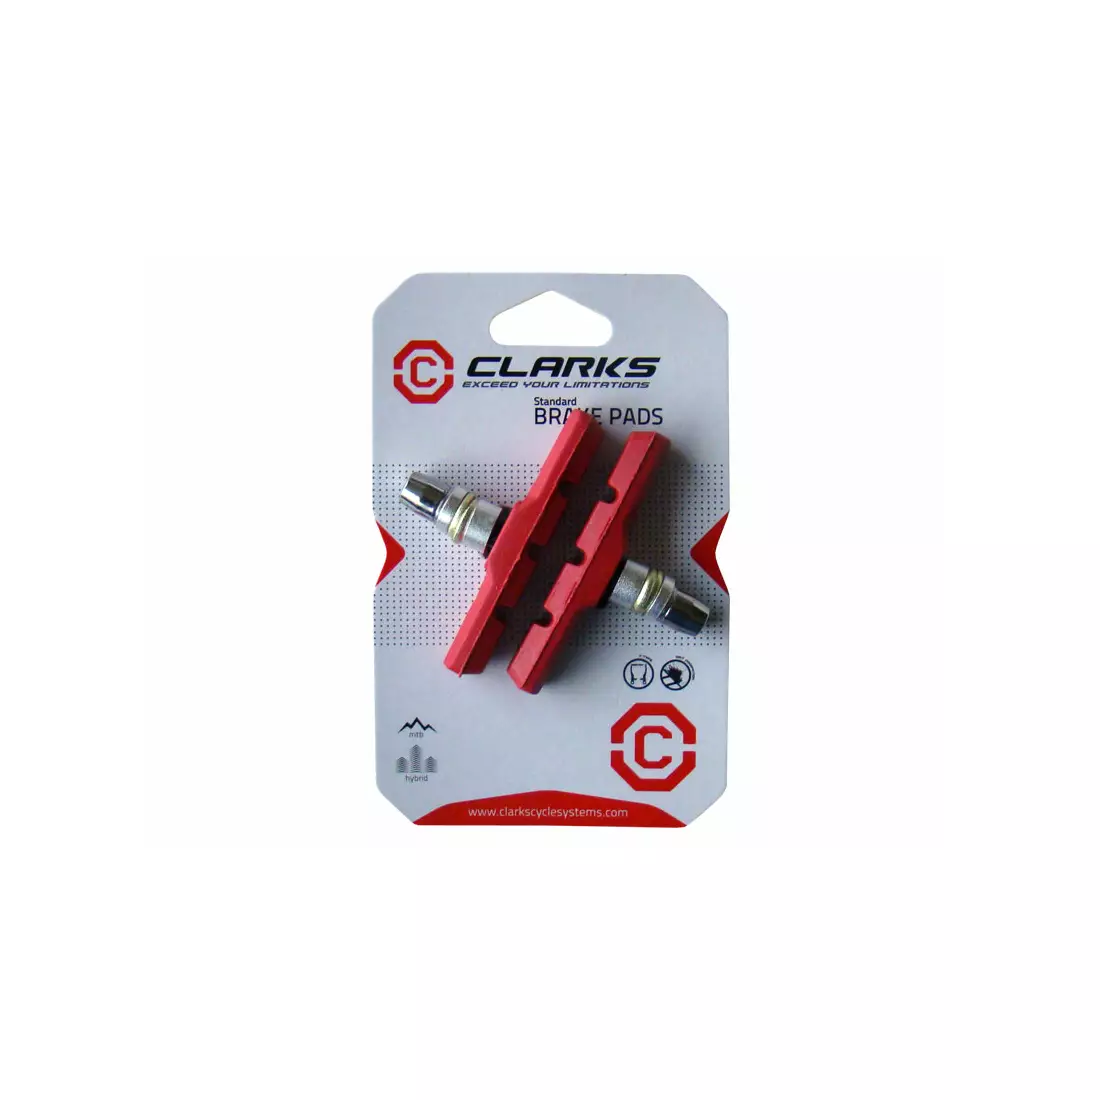 CLARKS CP511 MTB Bremsbeläge für Bremsen V-brake, Rot